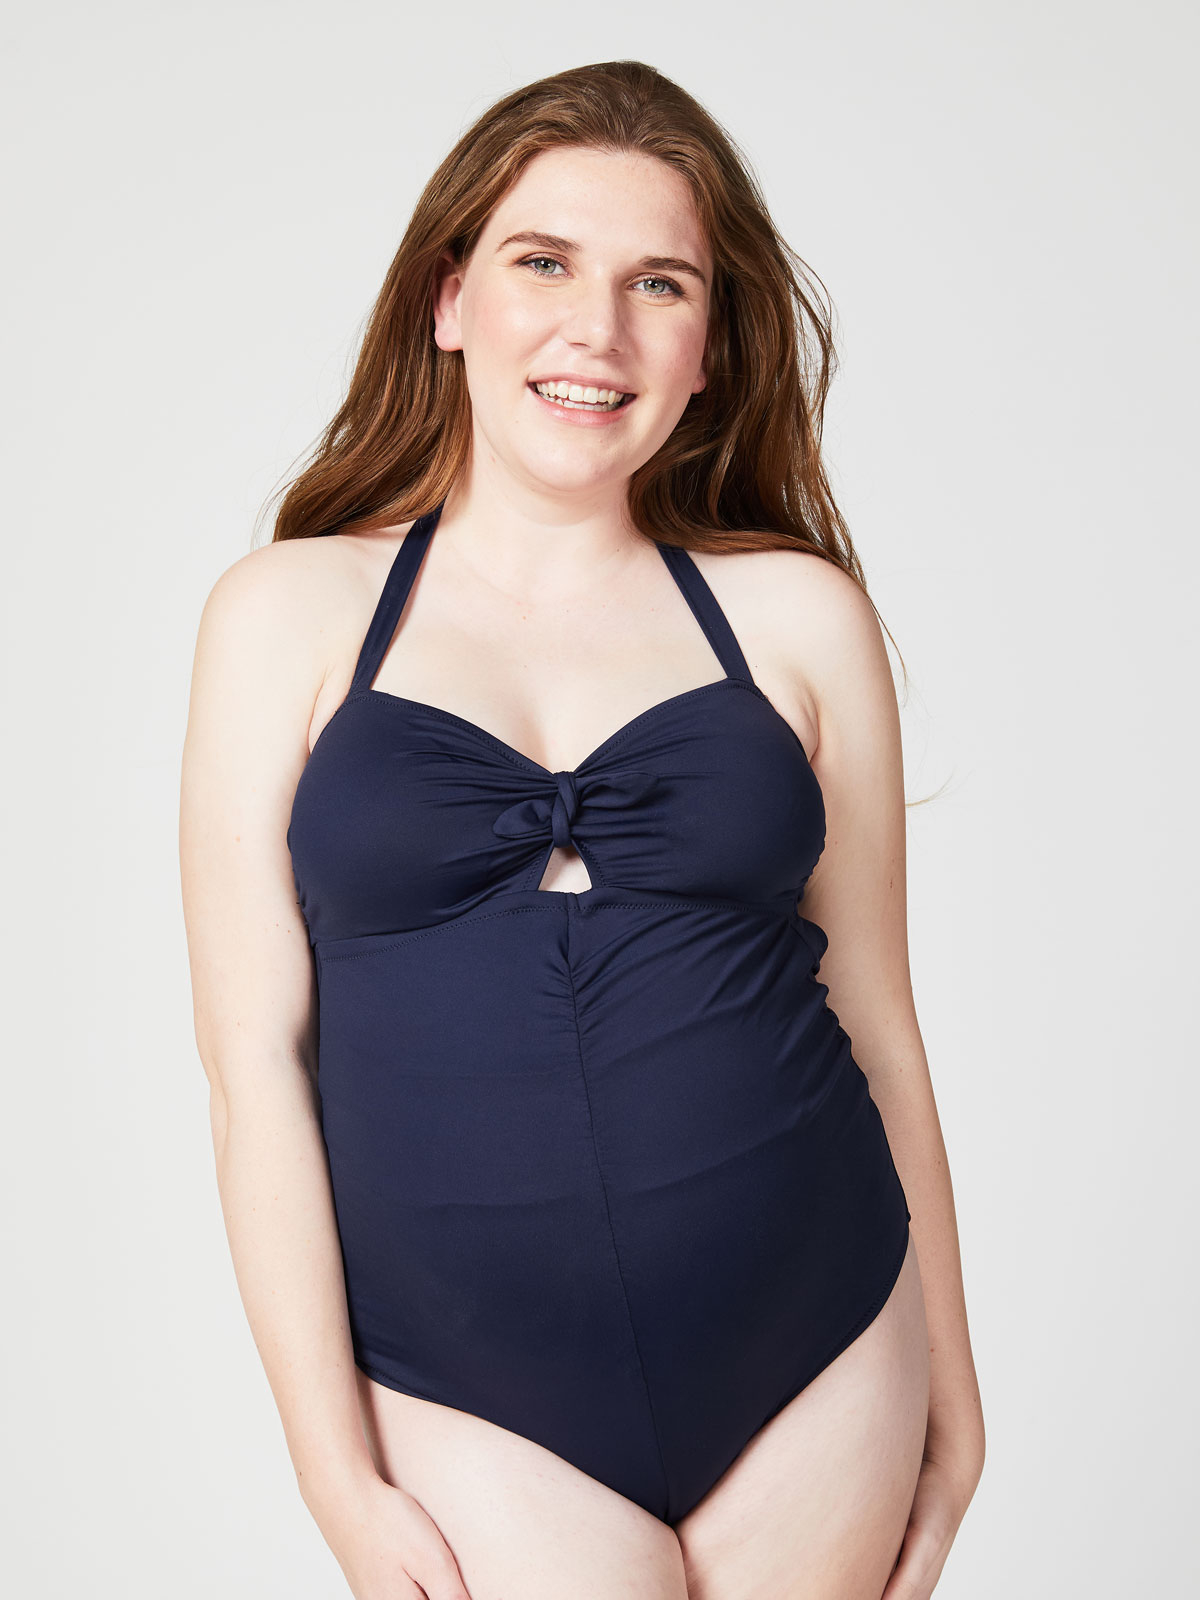 Spdoo Over Bump Lace Maternity Underwear Cotton Plus Size